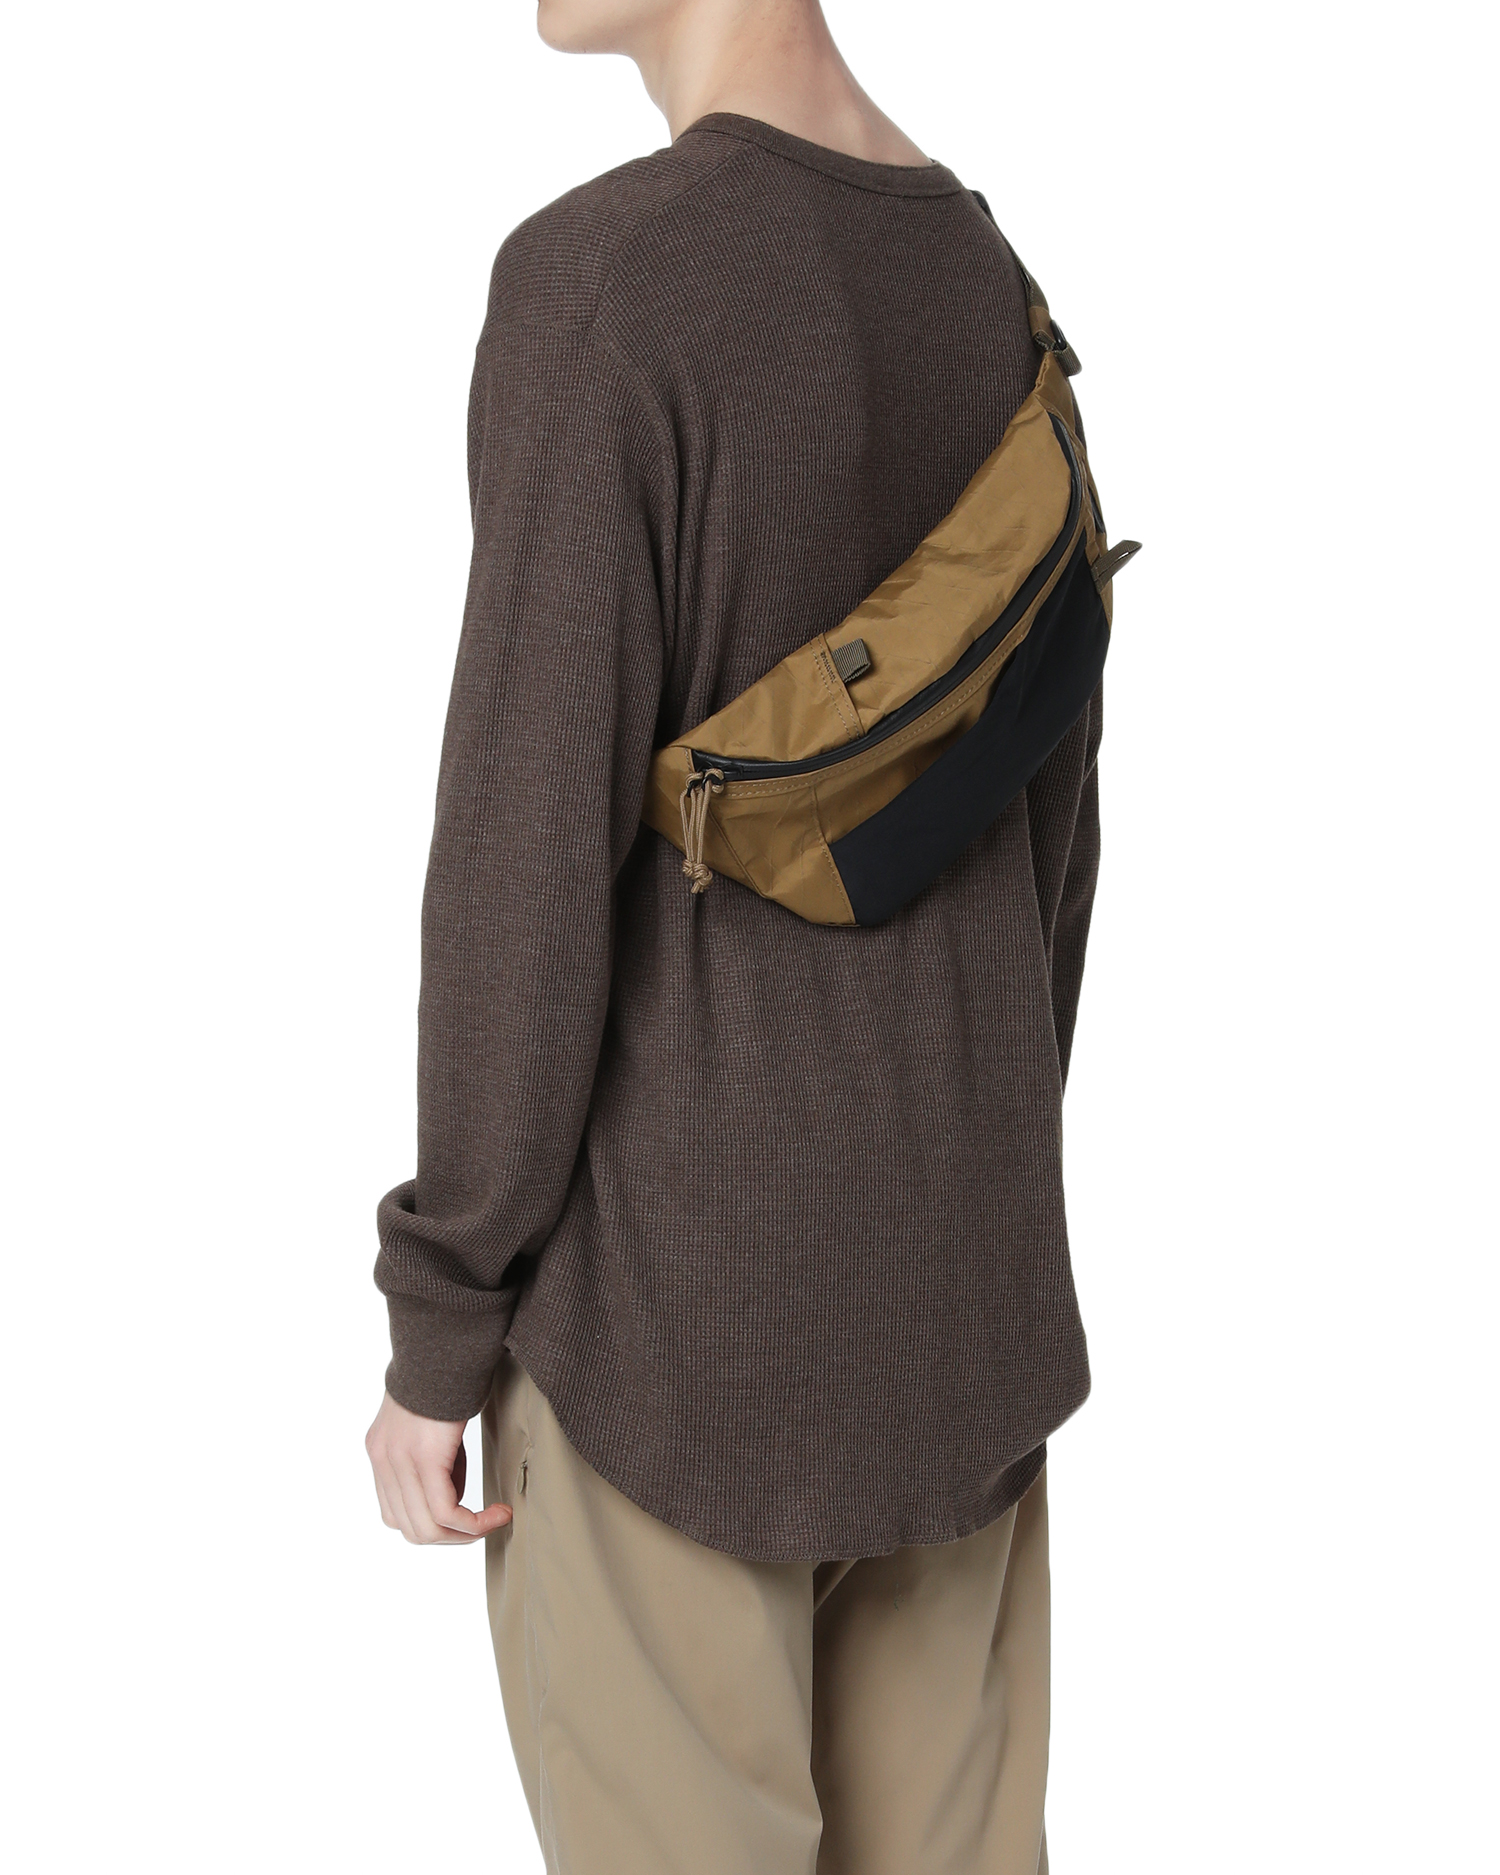 X-PAC Nylon waist bag